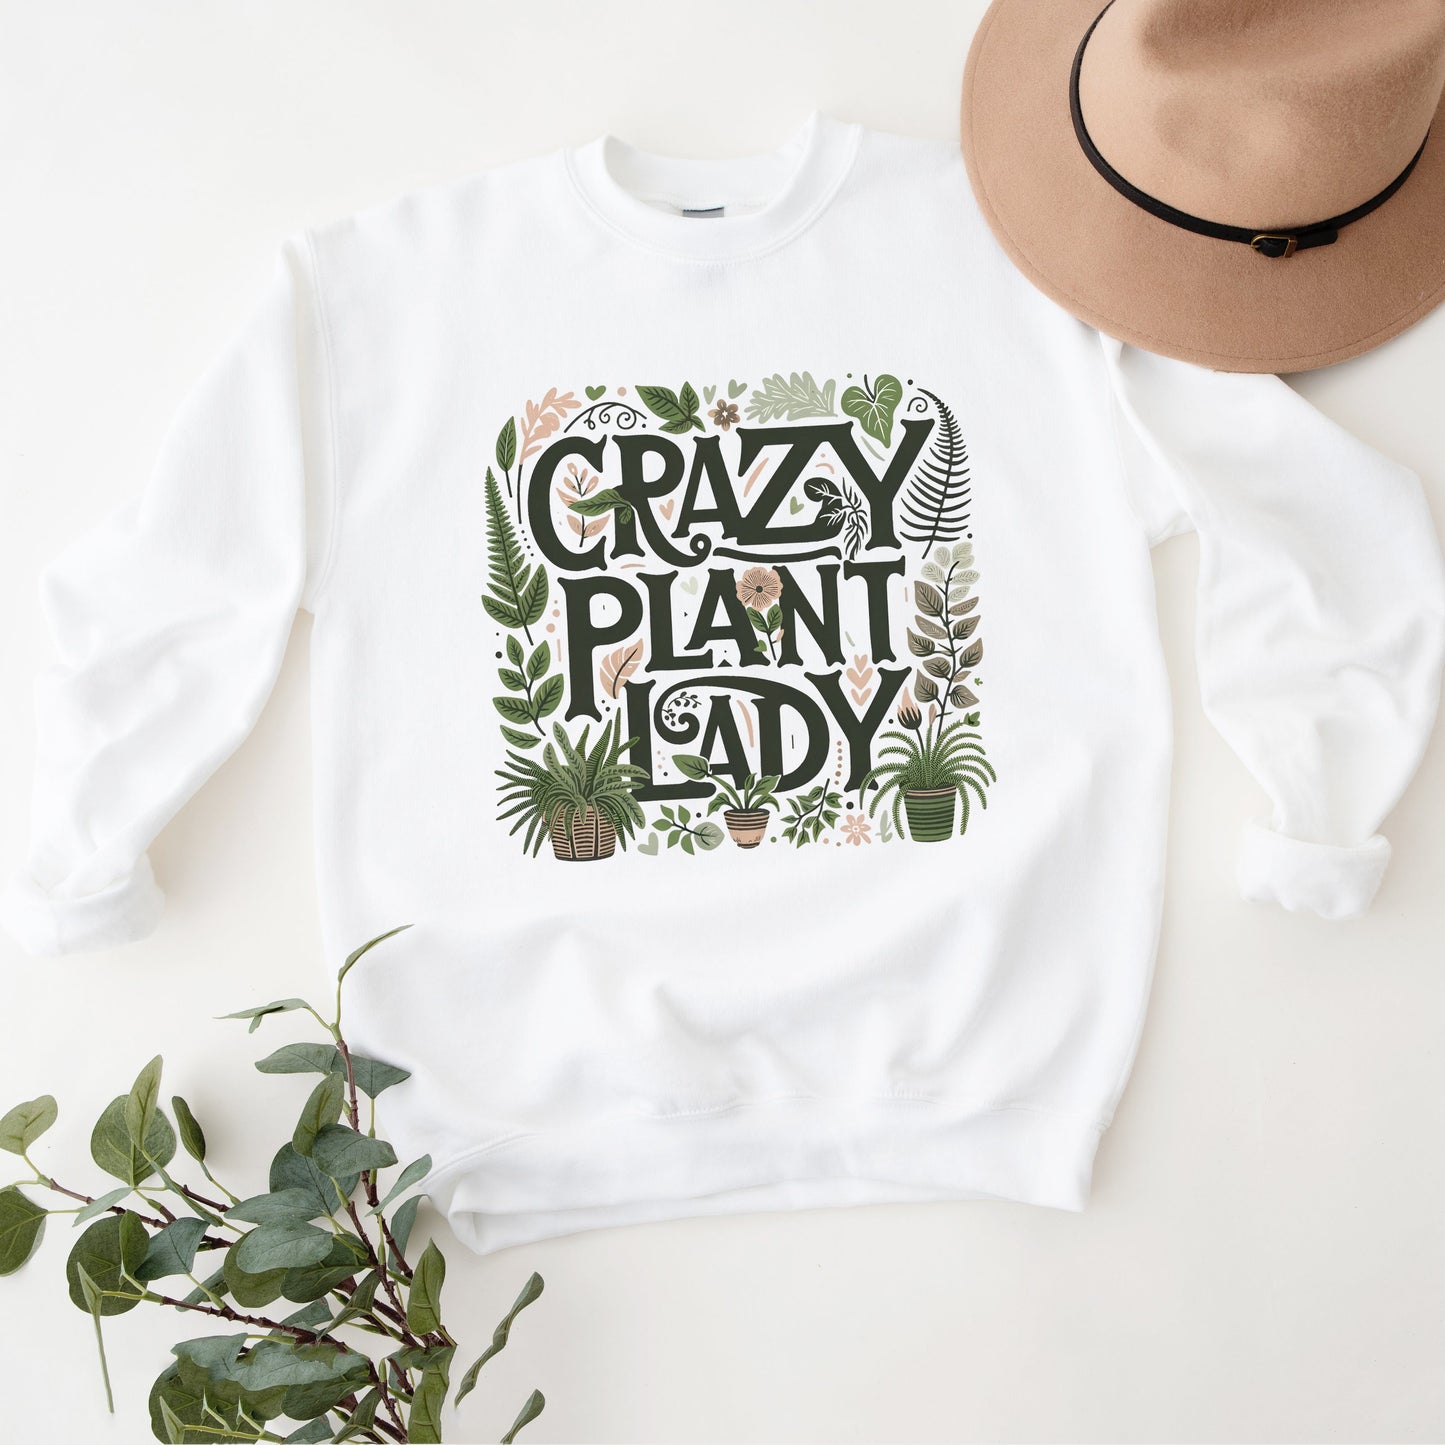 Crazy Plant Lady Colorful | Sweatshirt